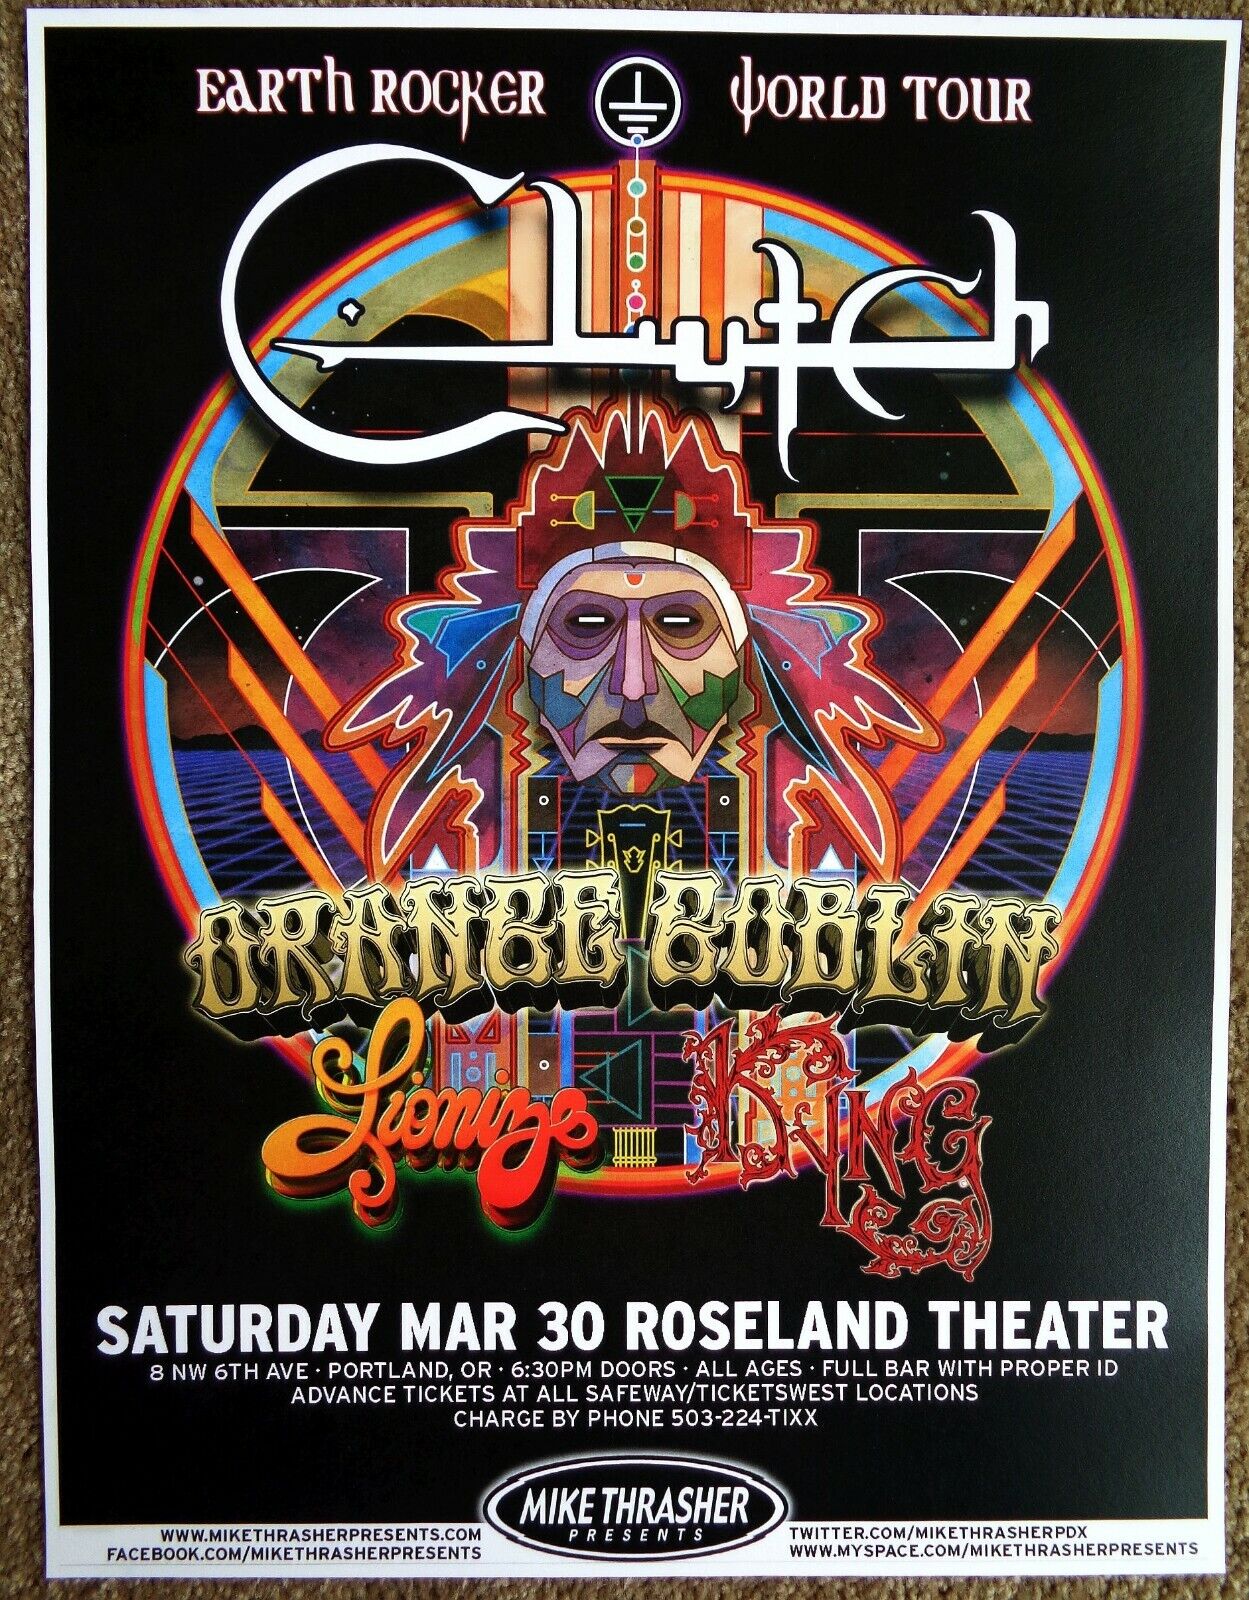 CLUTCH 2013 Gig POSTER Portland Oregon Concert Earth Rocker Tour